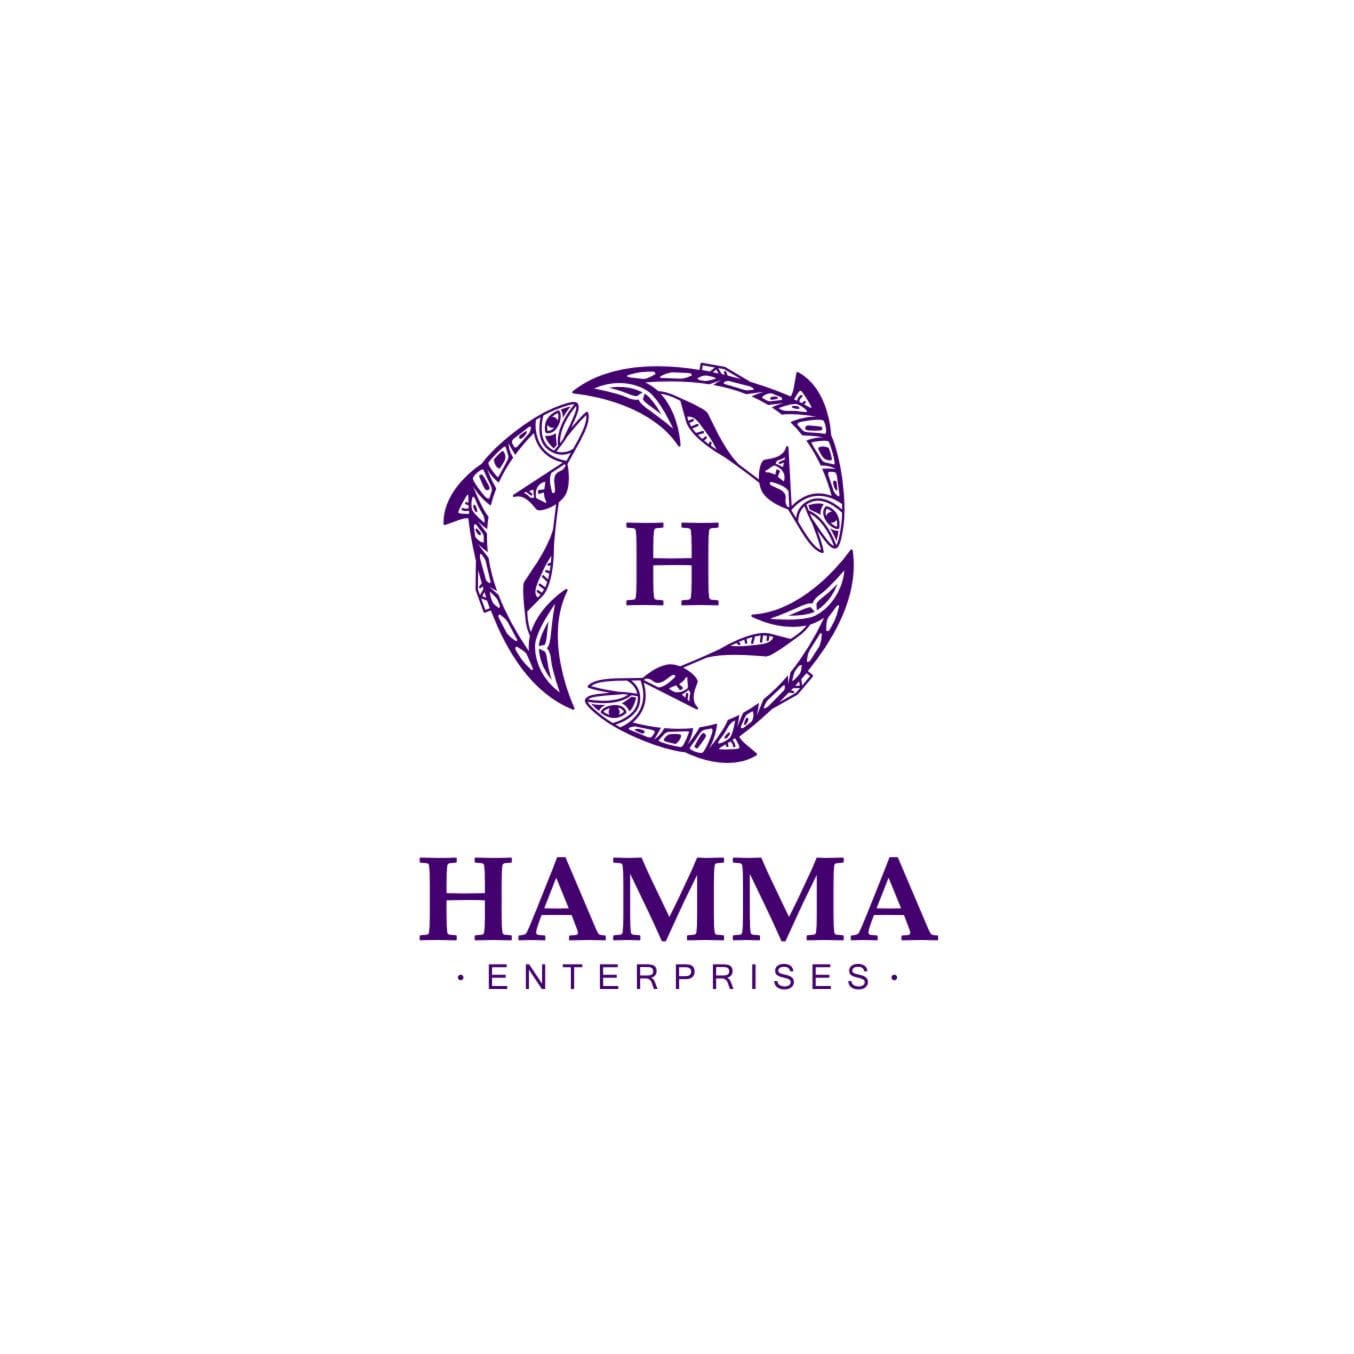 http://ve-tech.net/wp-content/uploads/2018/12/Hamma-Enterprises-1.jpg